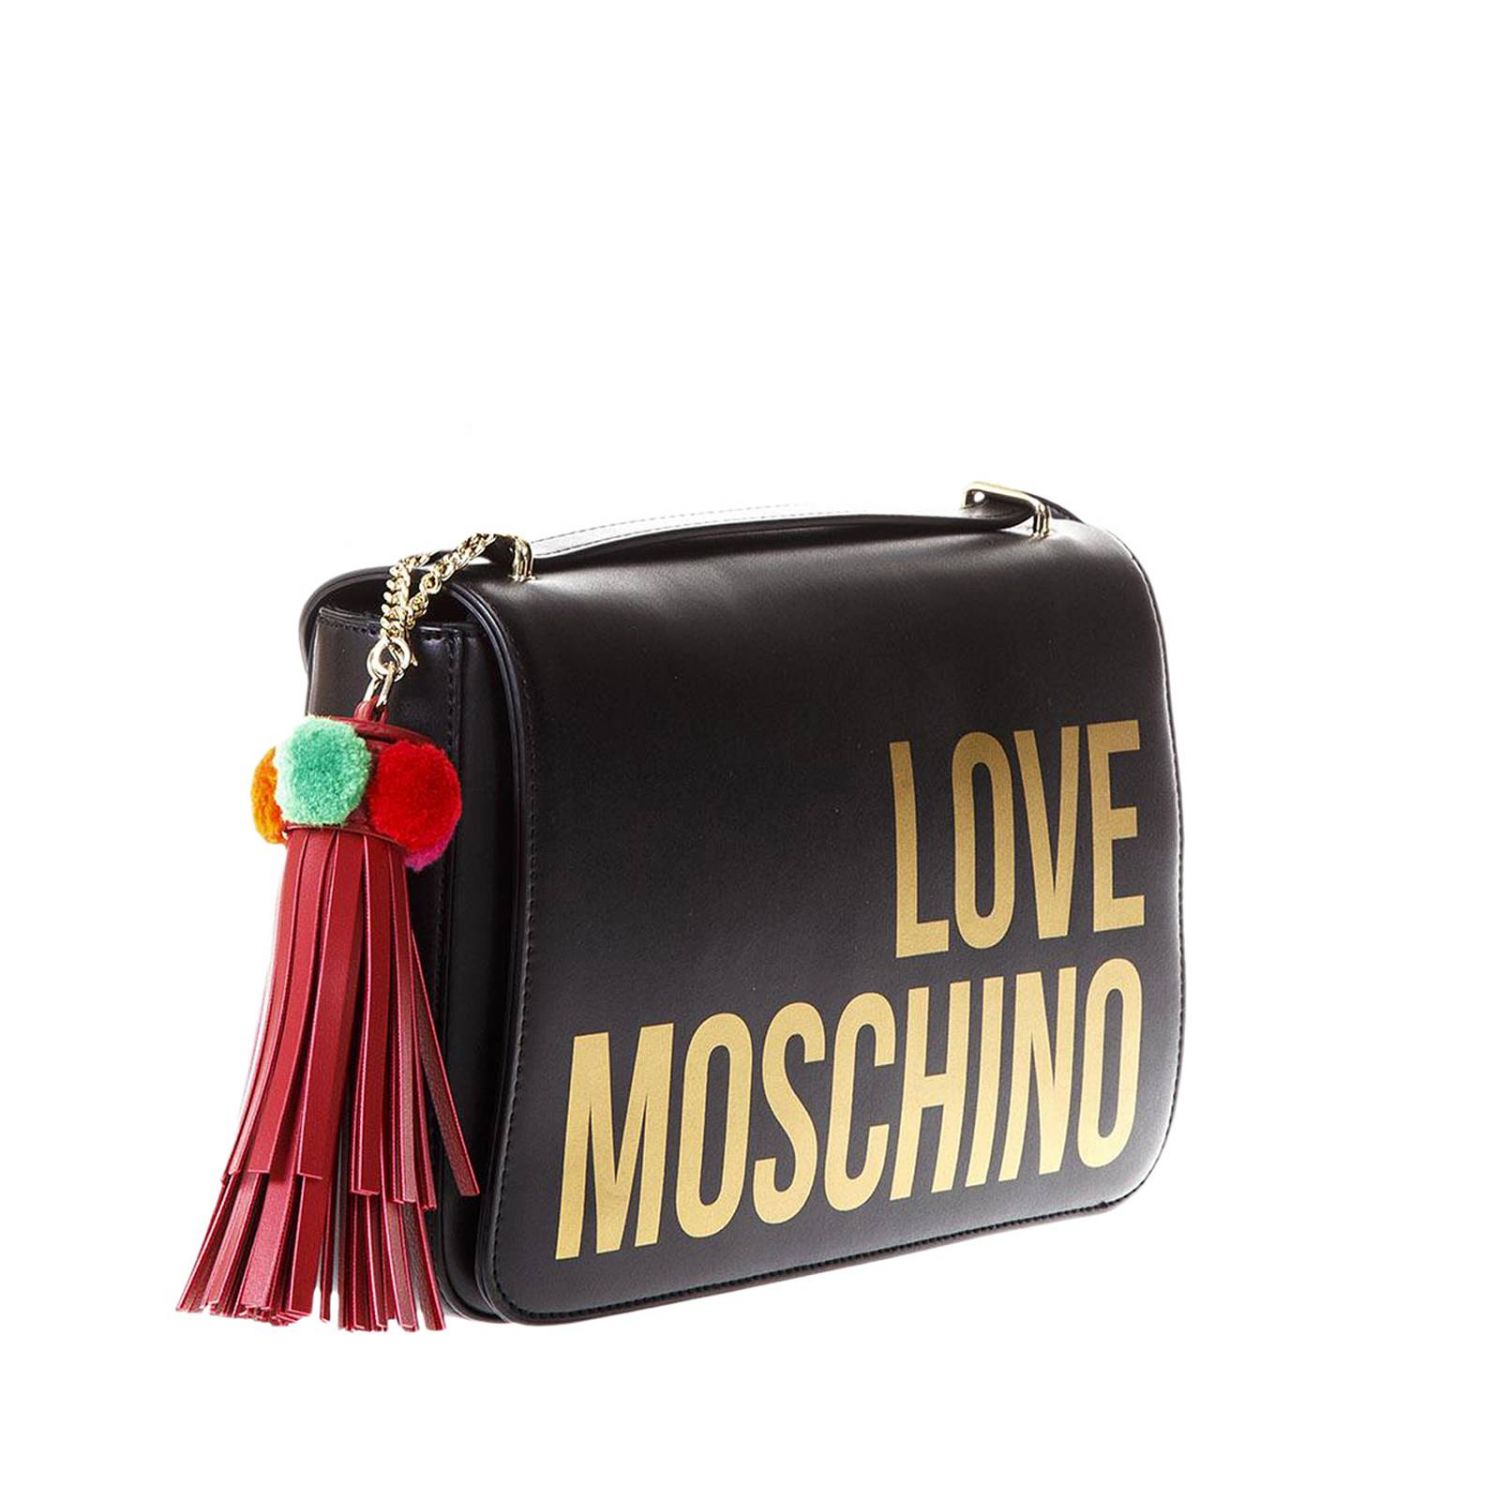 Love Moschino Outlet: Handbag women Moschino Love | Handbag Love ...